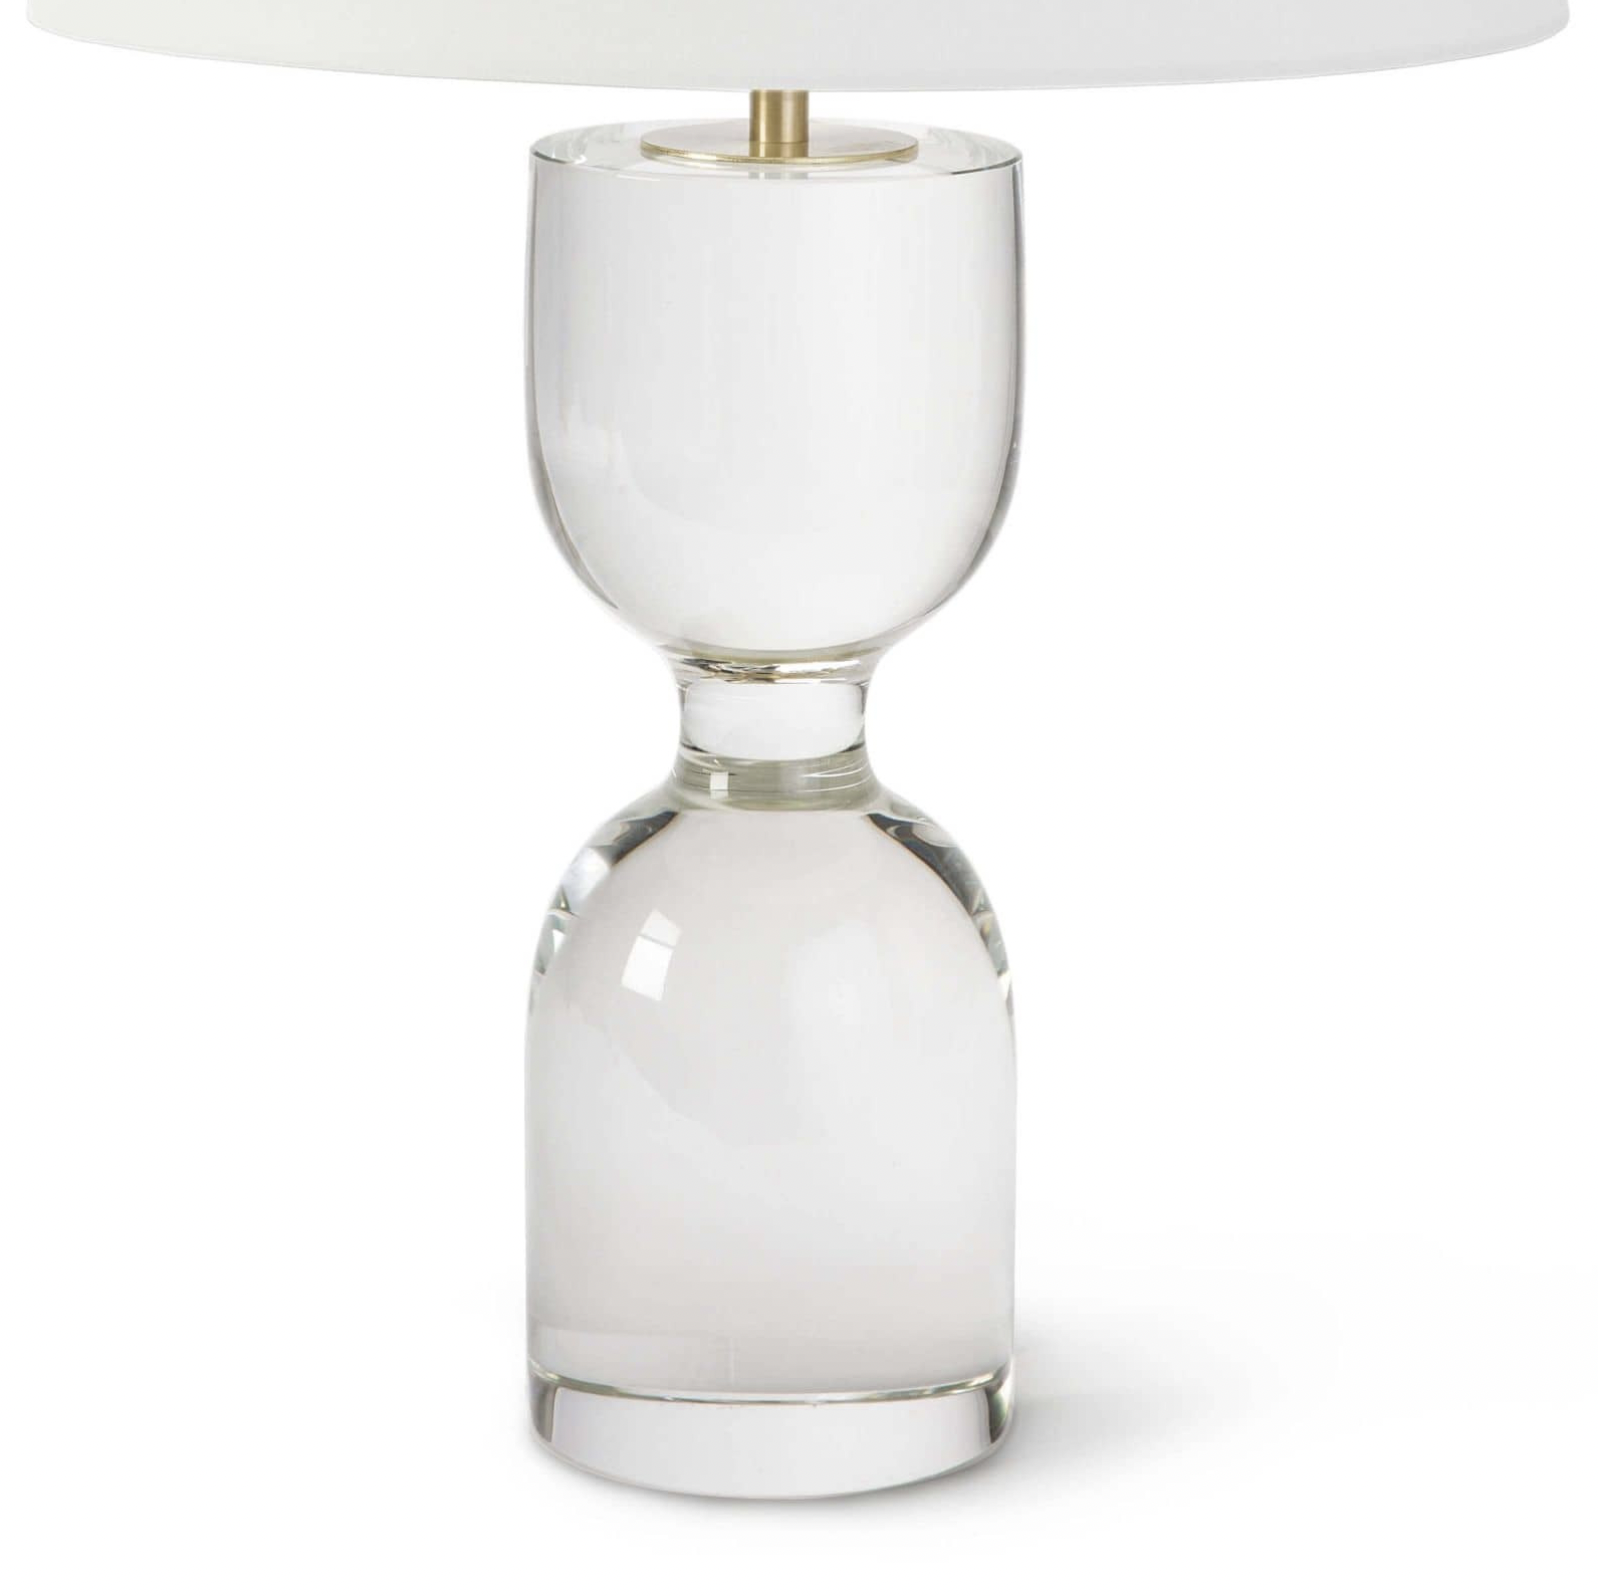 Rena Crystal Hourglass Table Lamp